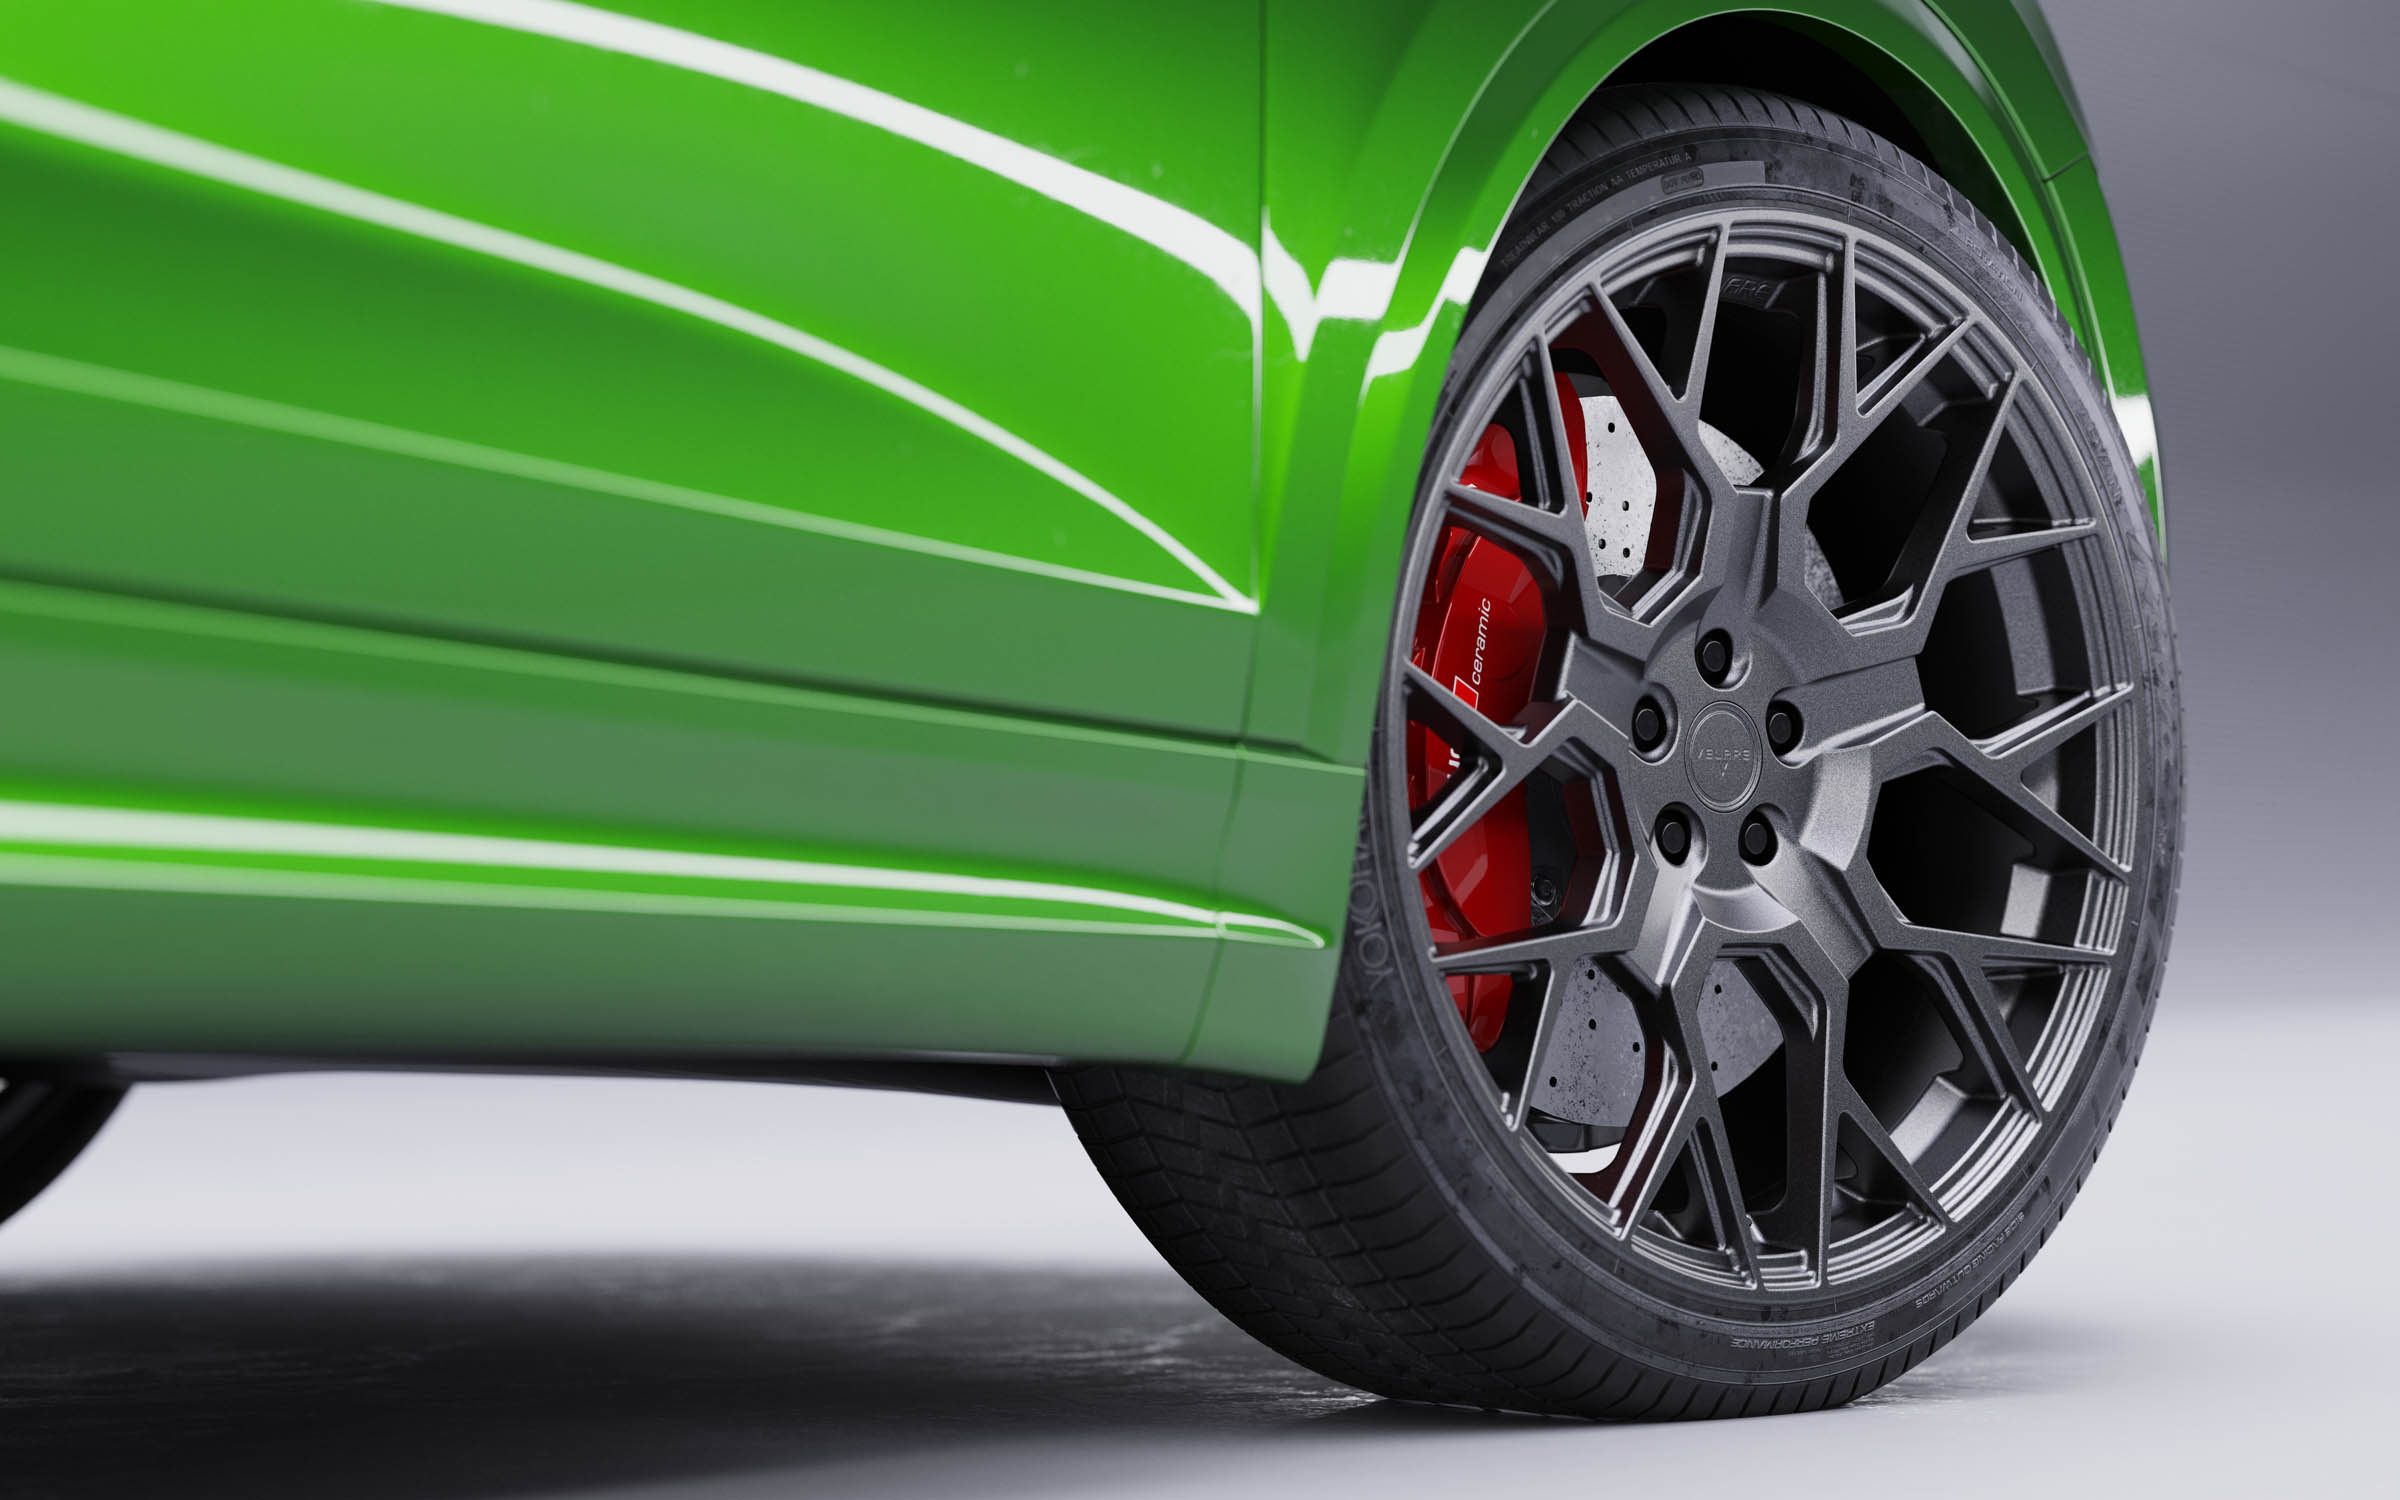 Audi Q8 RS 2020 Green Matt Graphite Velare VLR02 Wipdesigns 3D CGI Visualisation 14